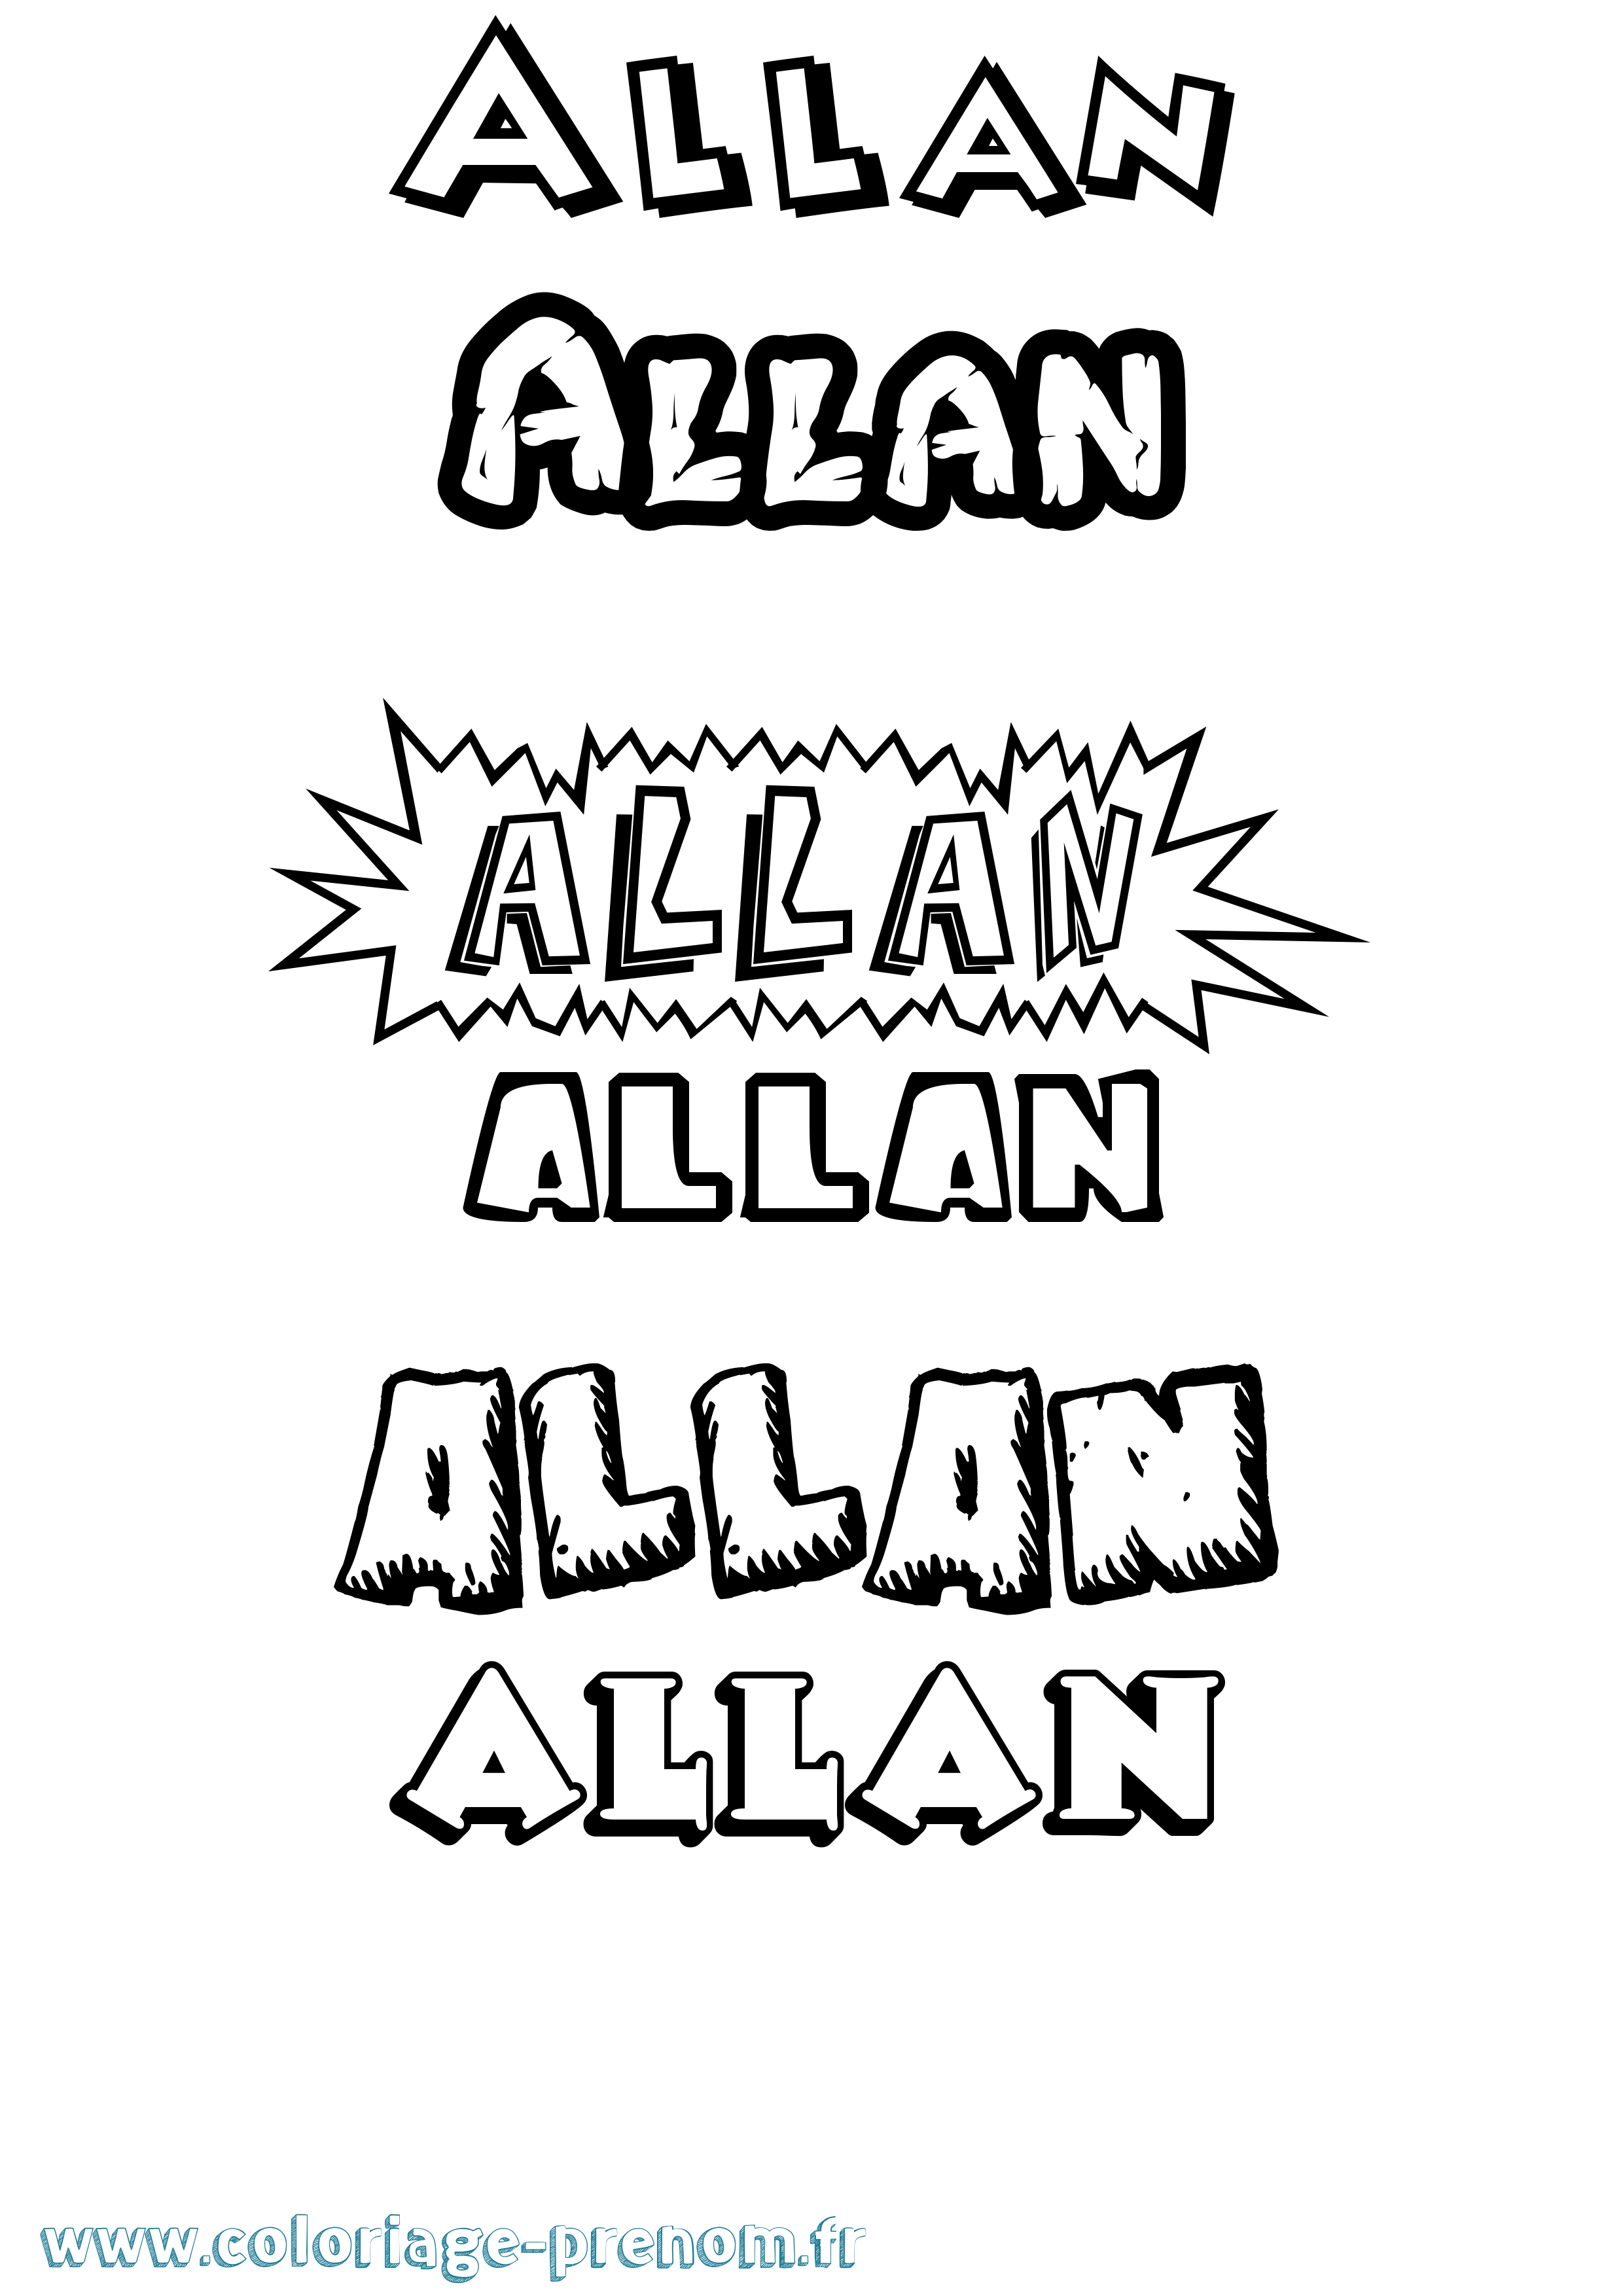 Coloriage prénom Allan